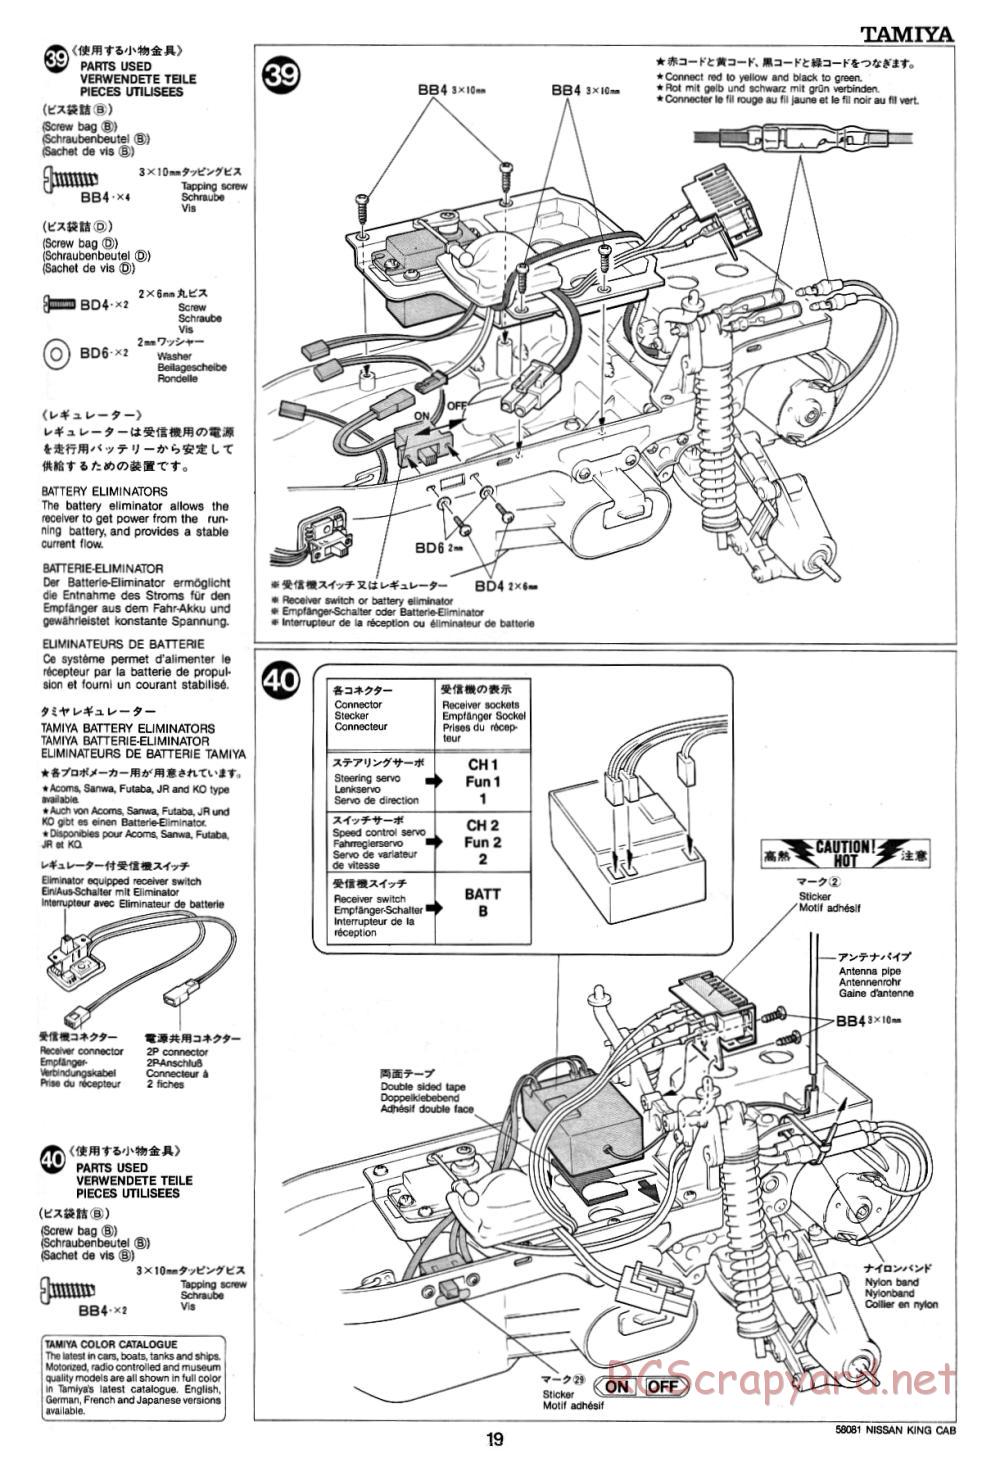 Tamiya - Nissan King Cab - 58081 - Manual - Page 19